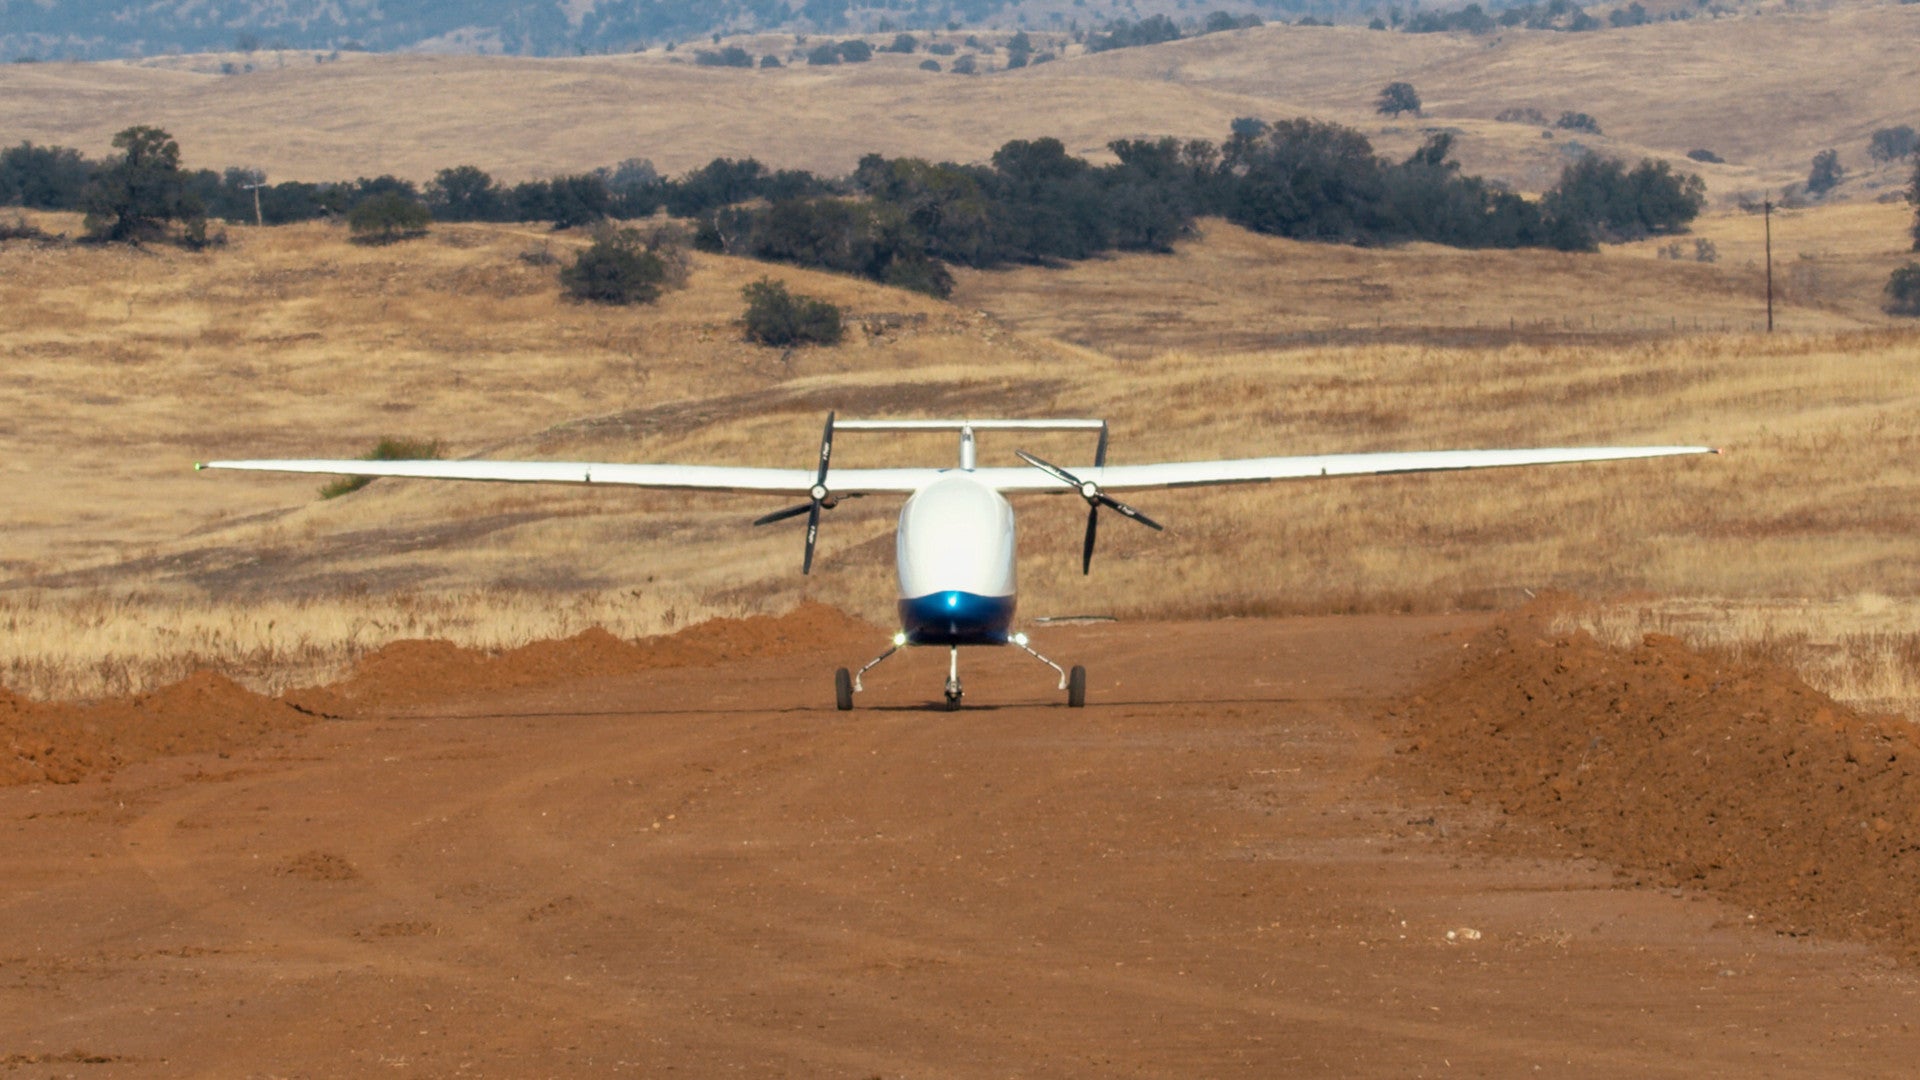 Pyka, Sierra Nevada Partner to Offer Massive Cargo Drone to U.S. DOD